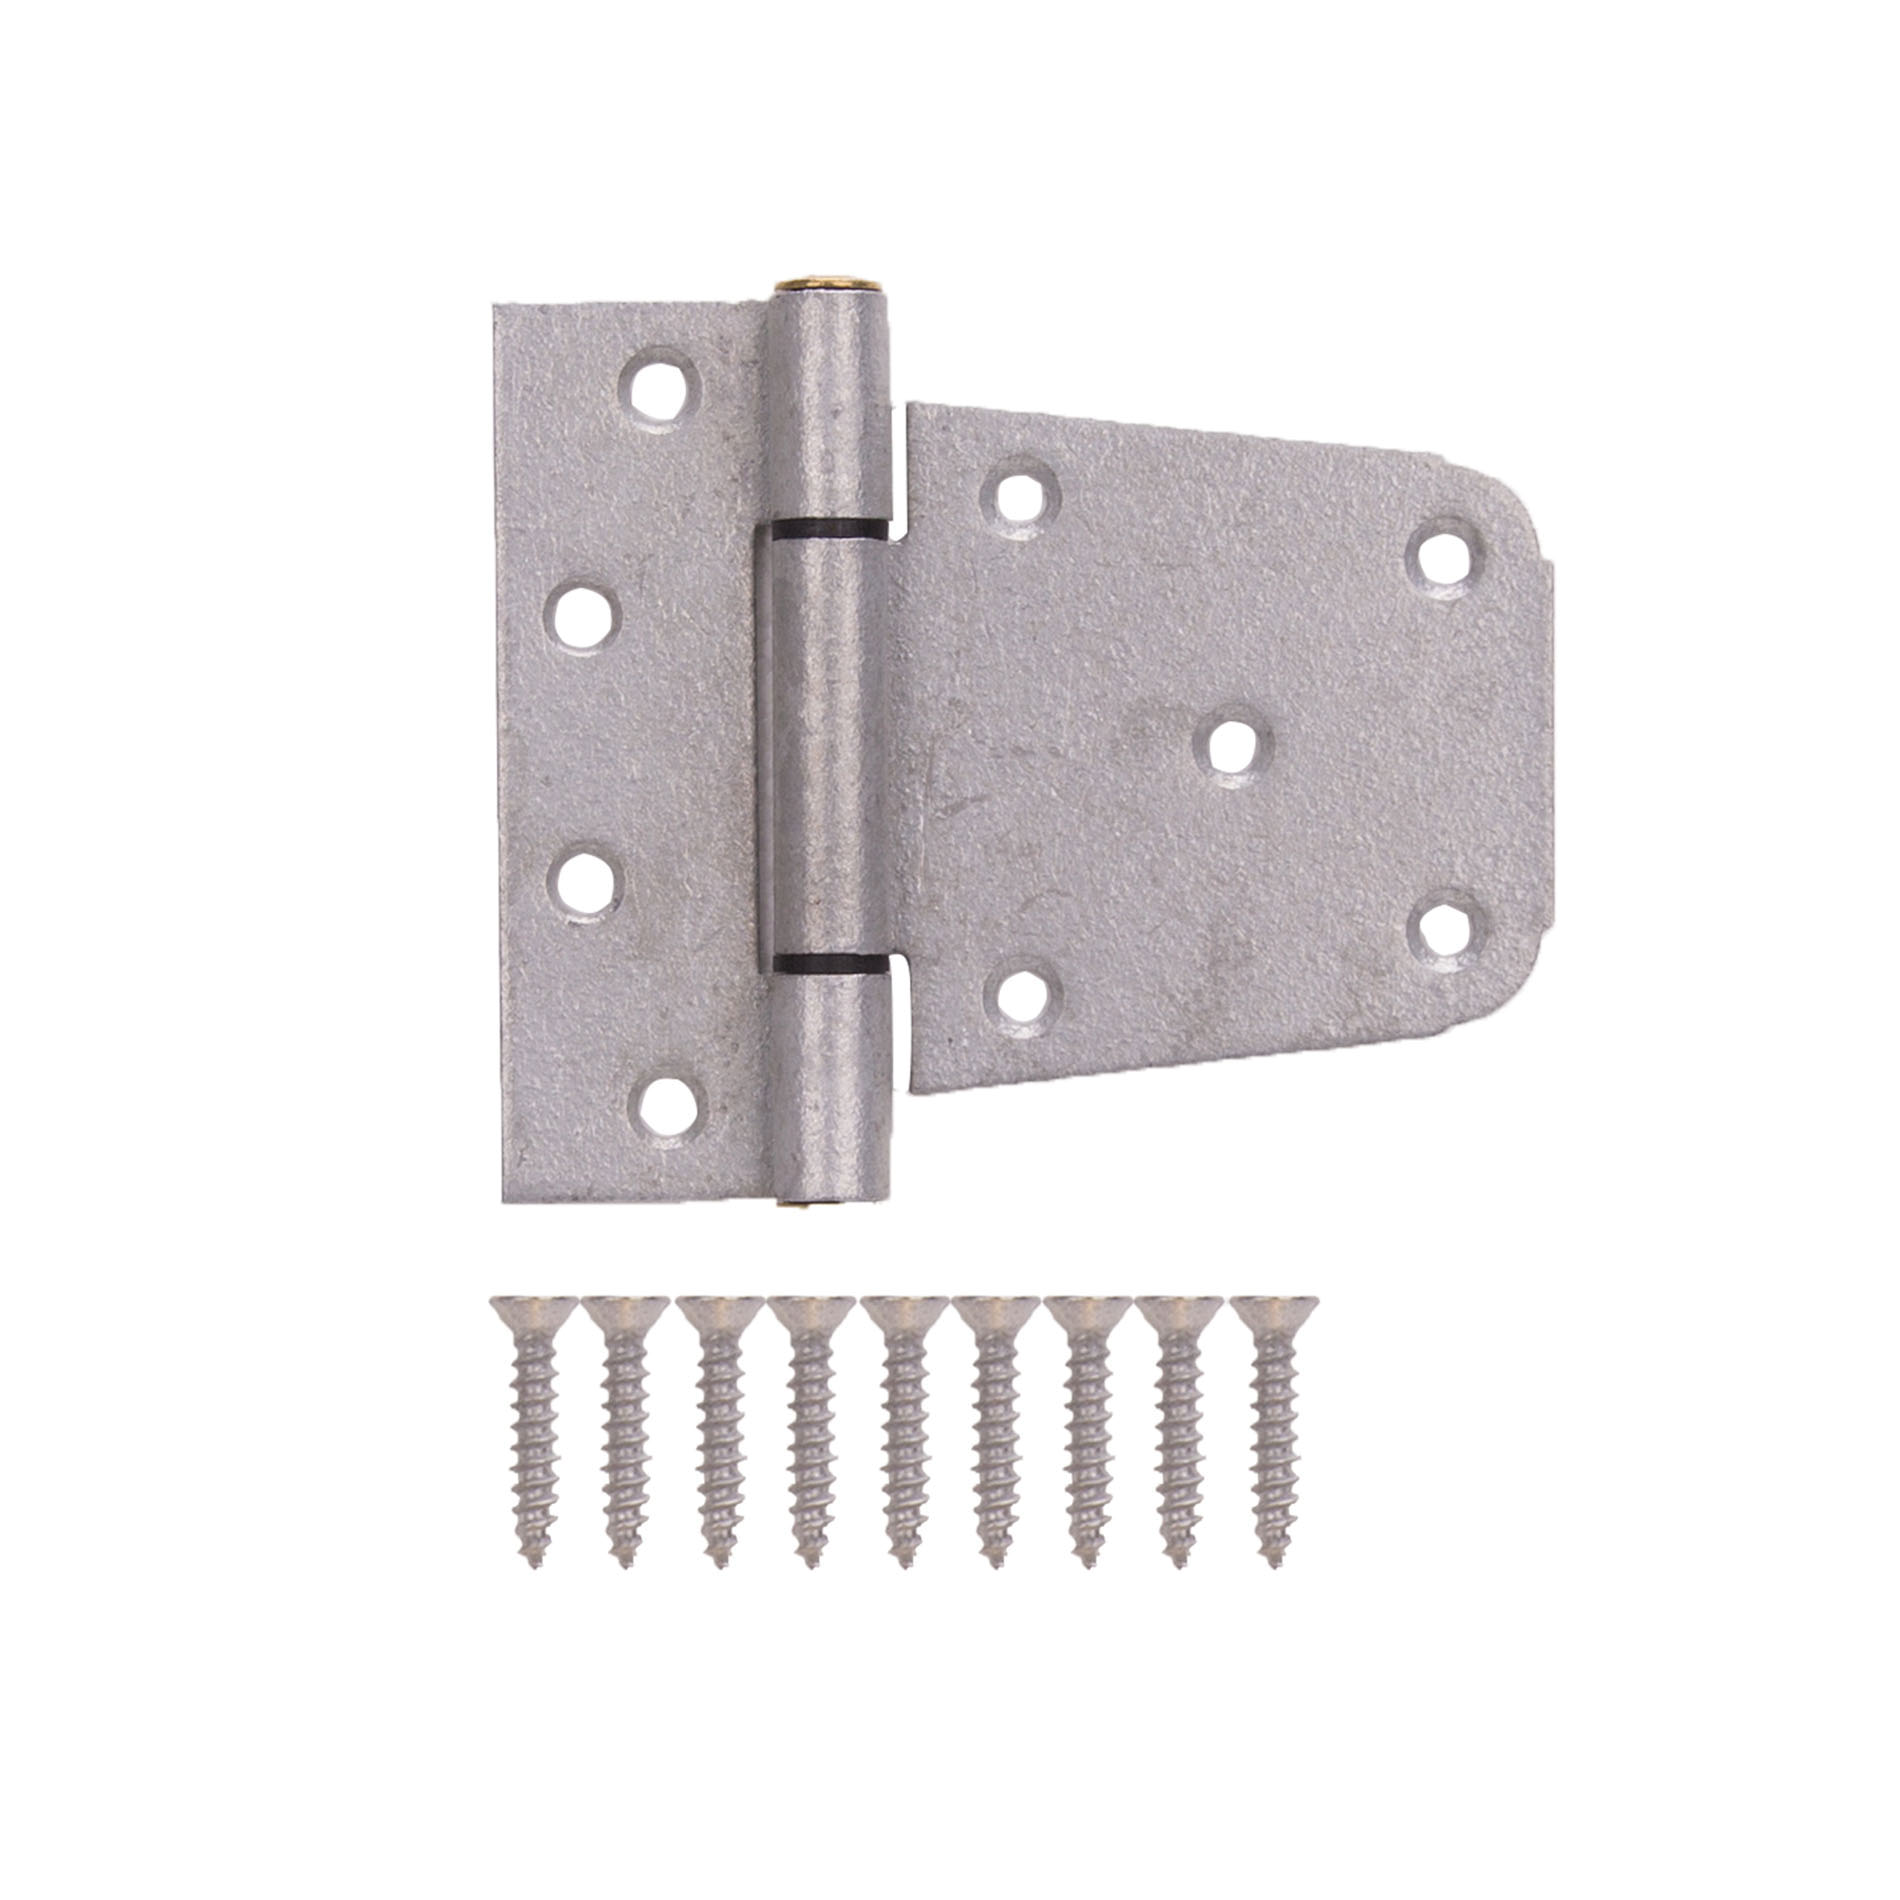 LR-182-PS Gate Hinge, Galvanized Steel, Galvanized, Fixed Pin, 180 deg Range of Motion, 46 (Pair) lb